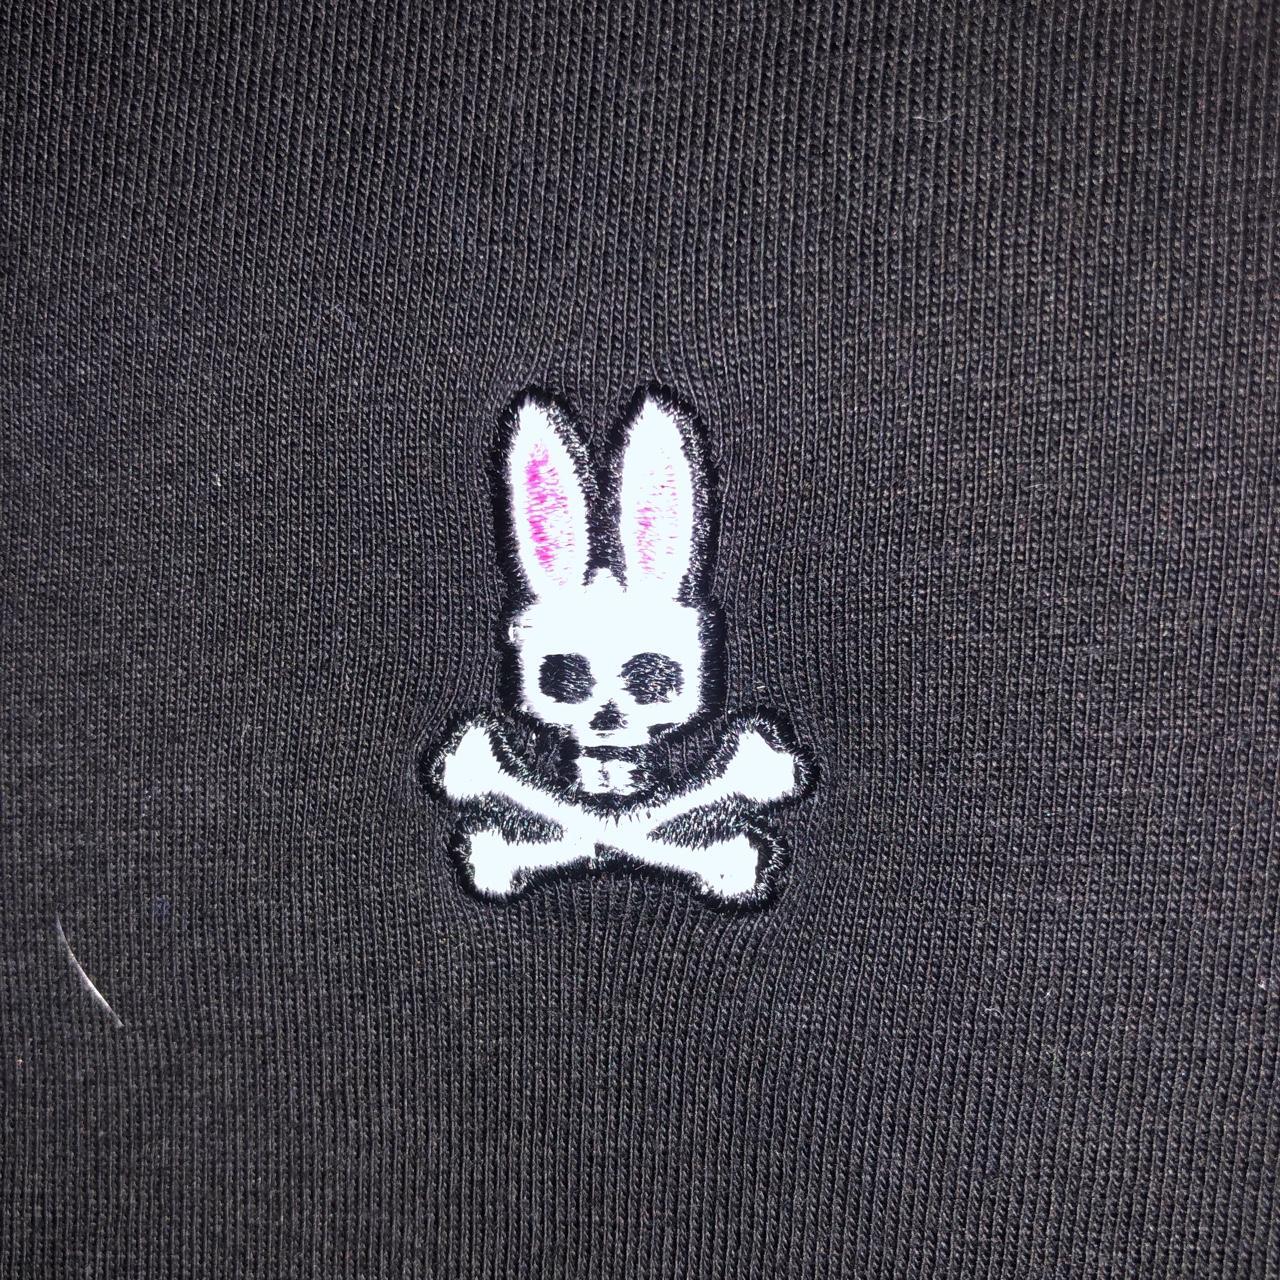 Psycho Bunny Men's Black T-shirt (4)